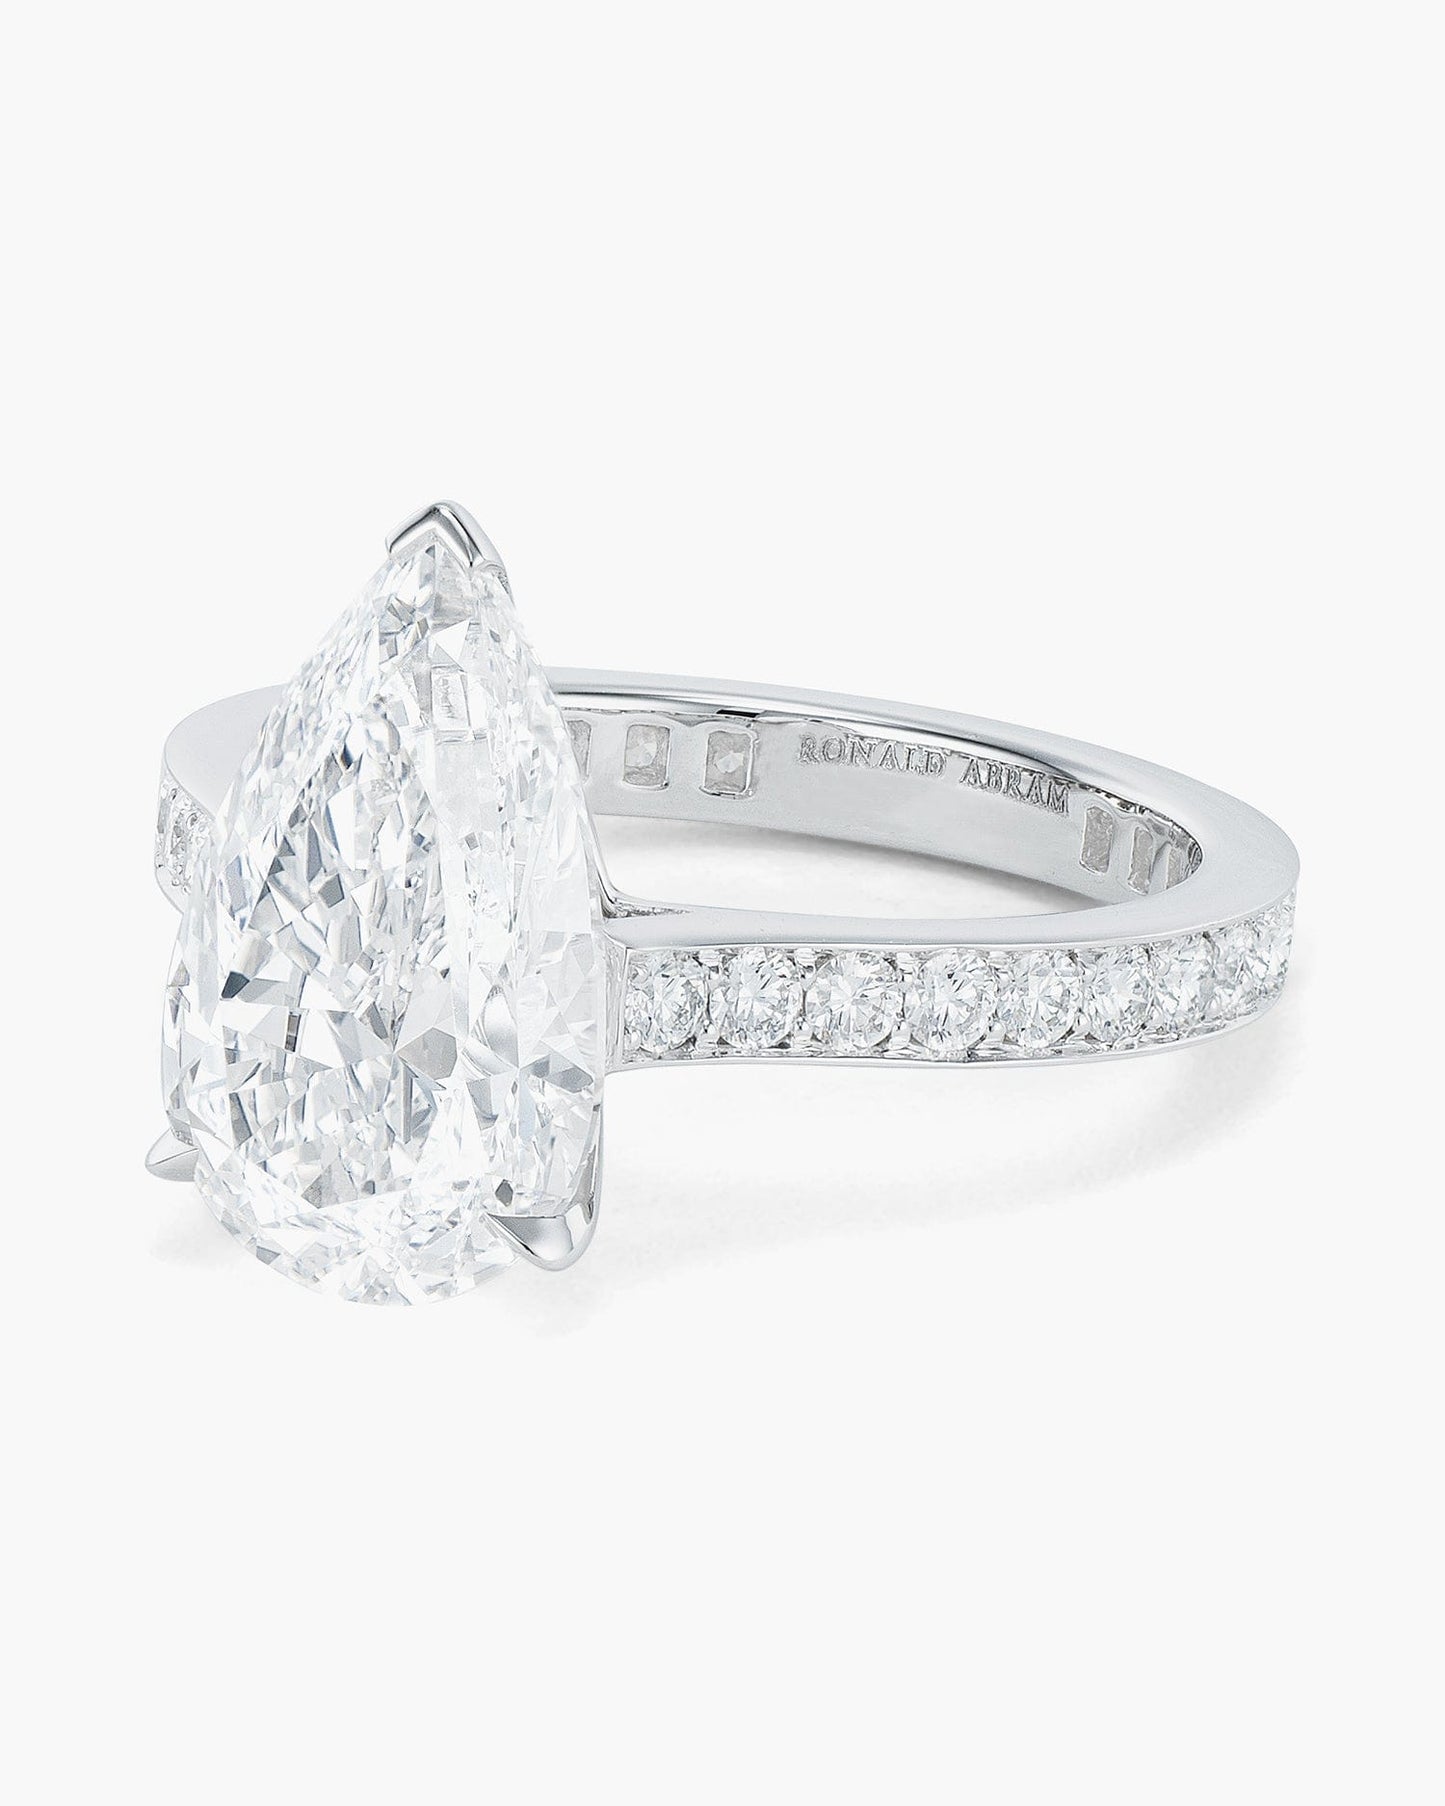 3.52 carat Pear Shape Diamond Ring